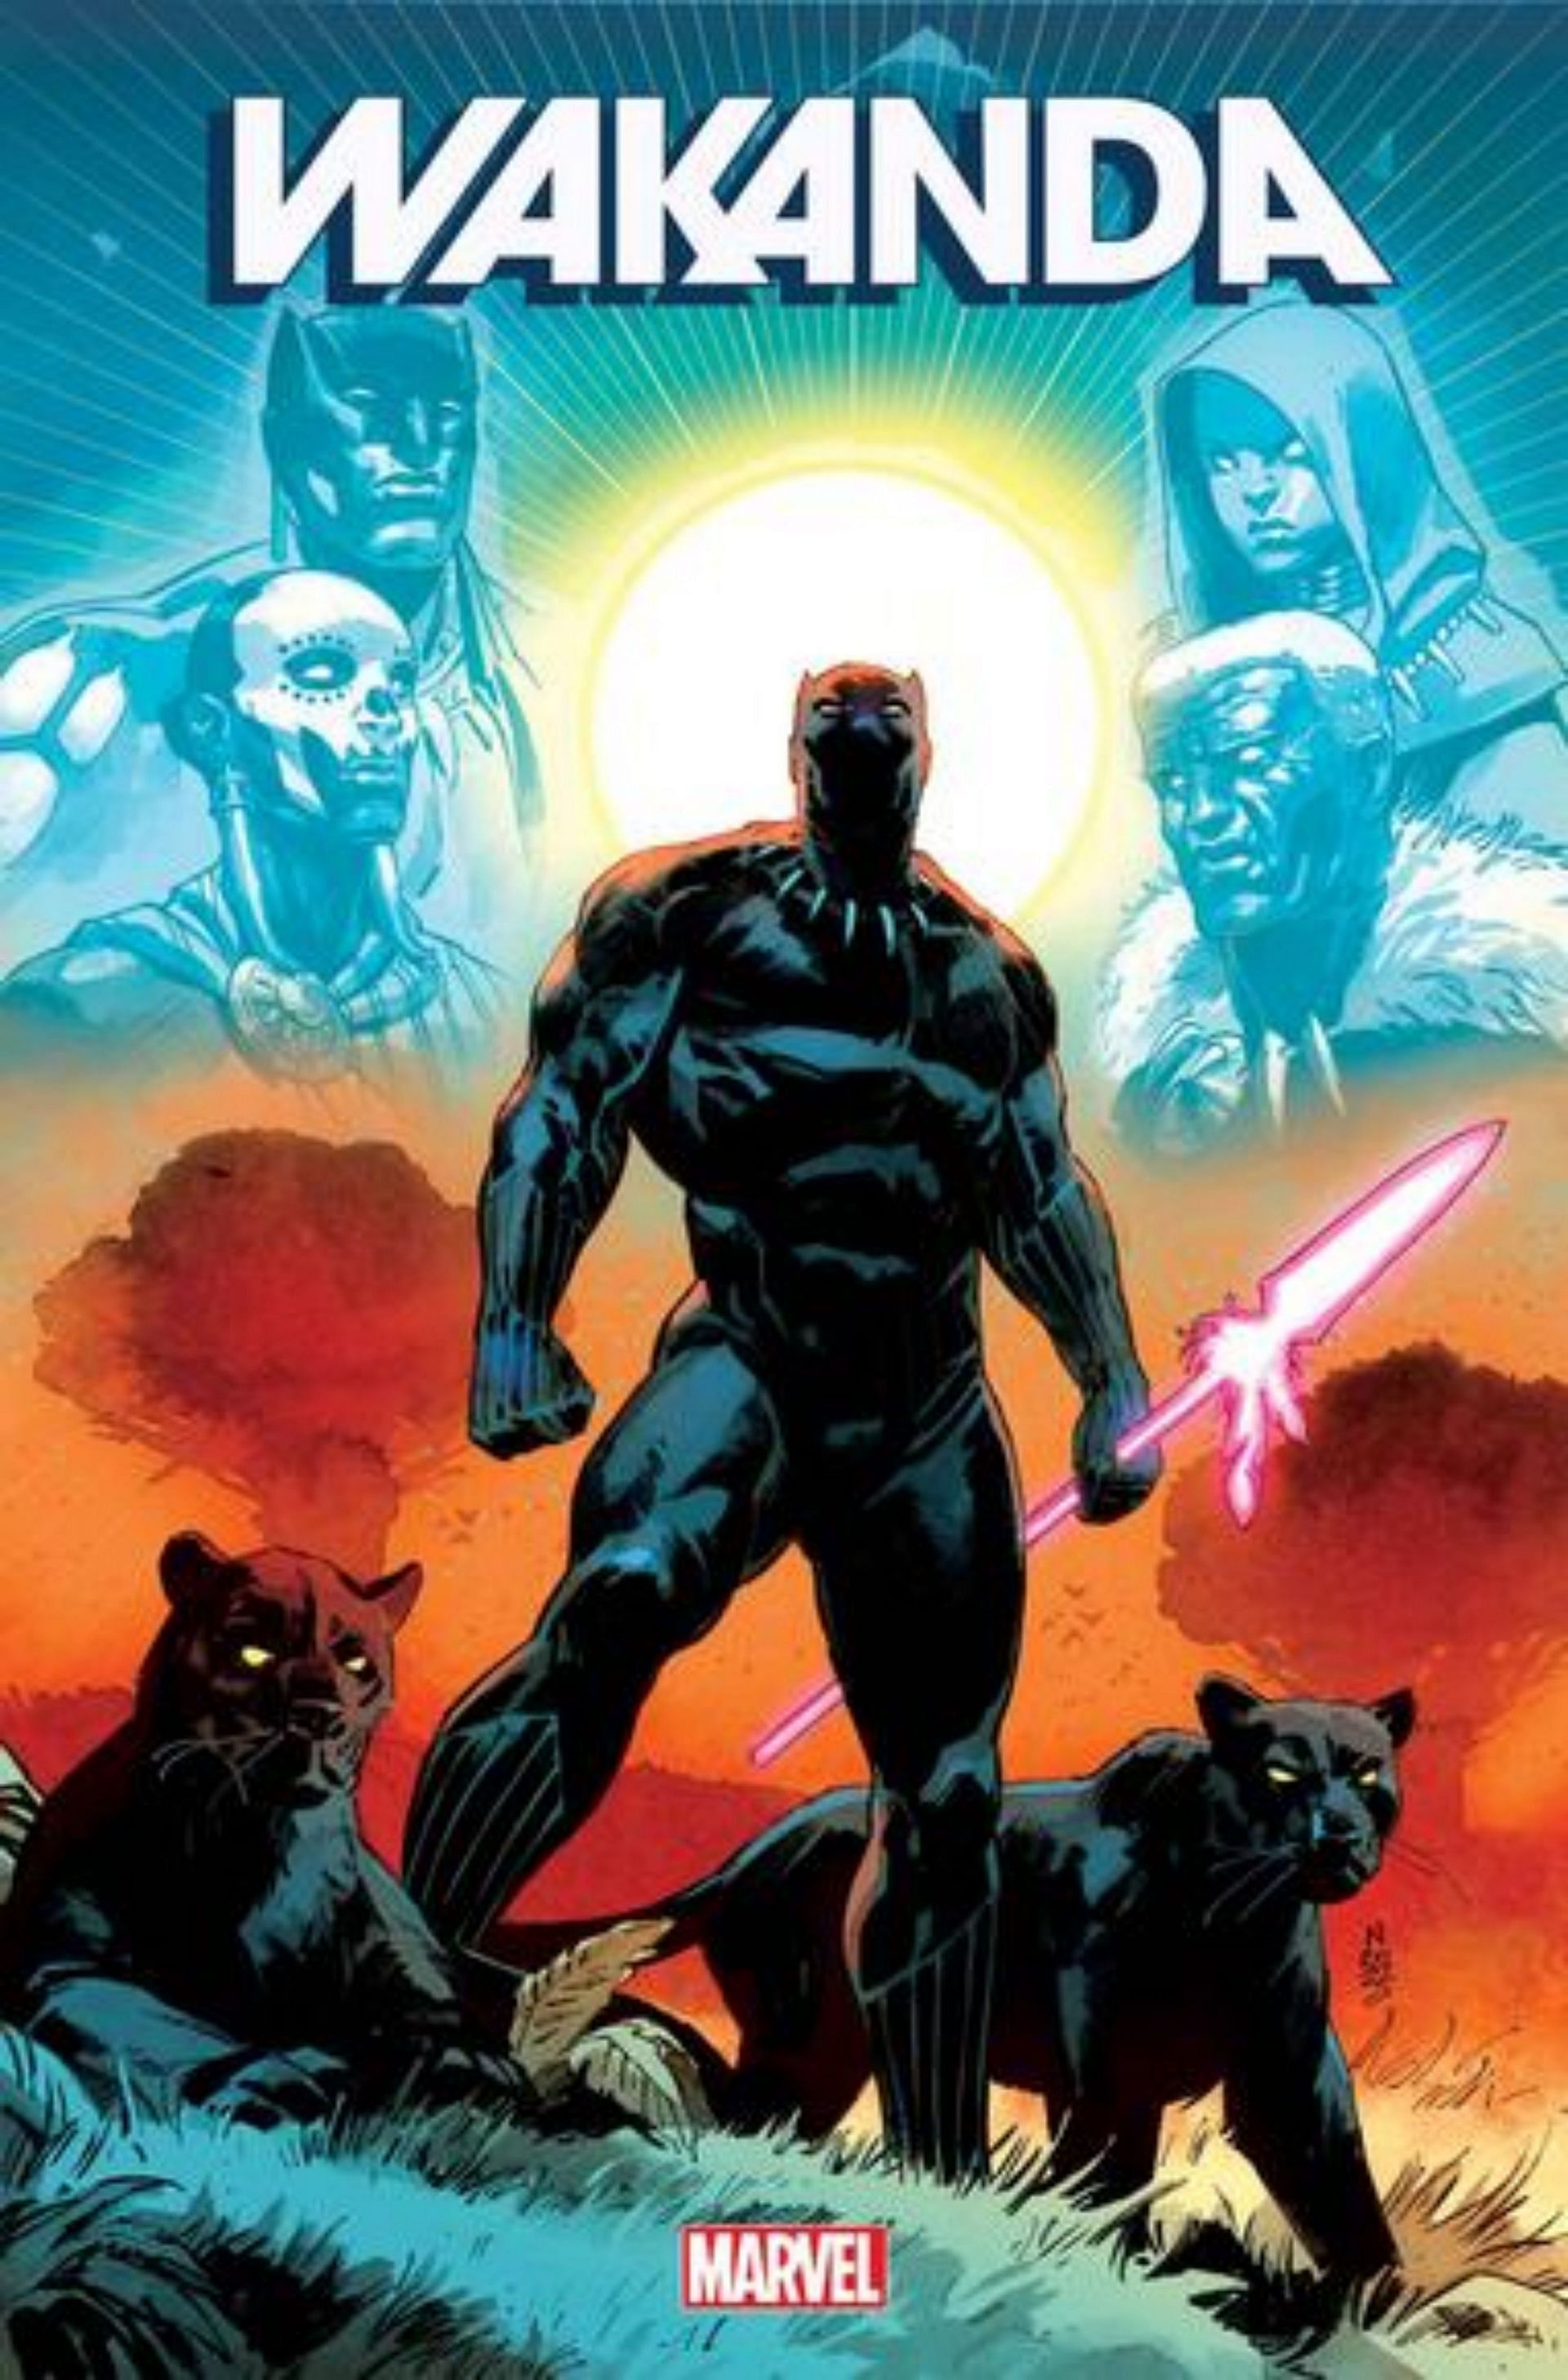 Wakanda comic cover (Image via Marvel Comics)